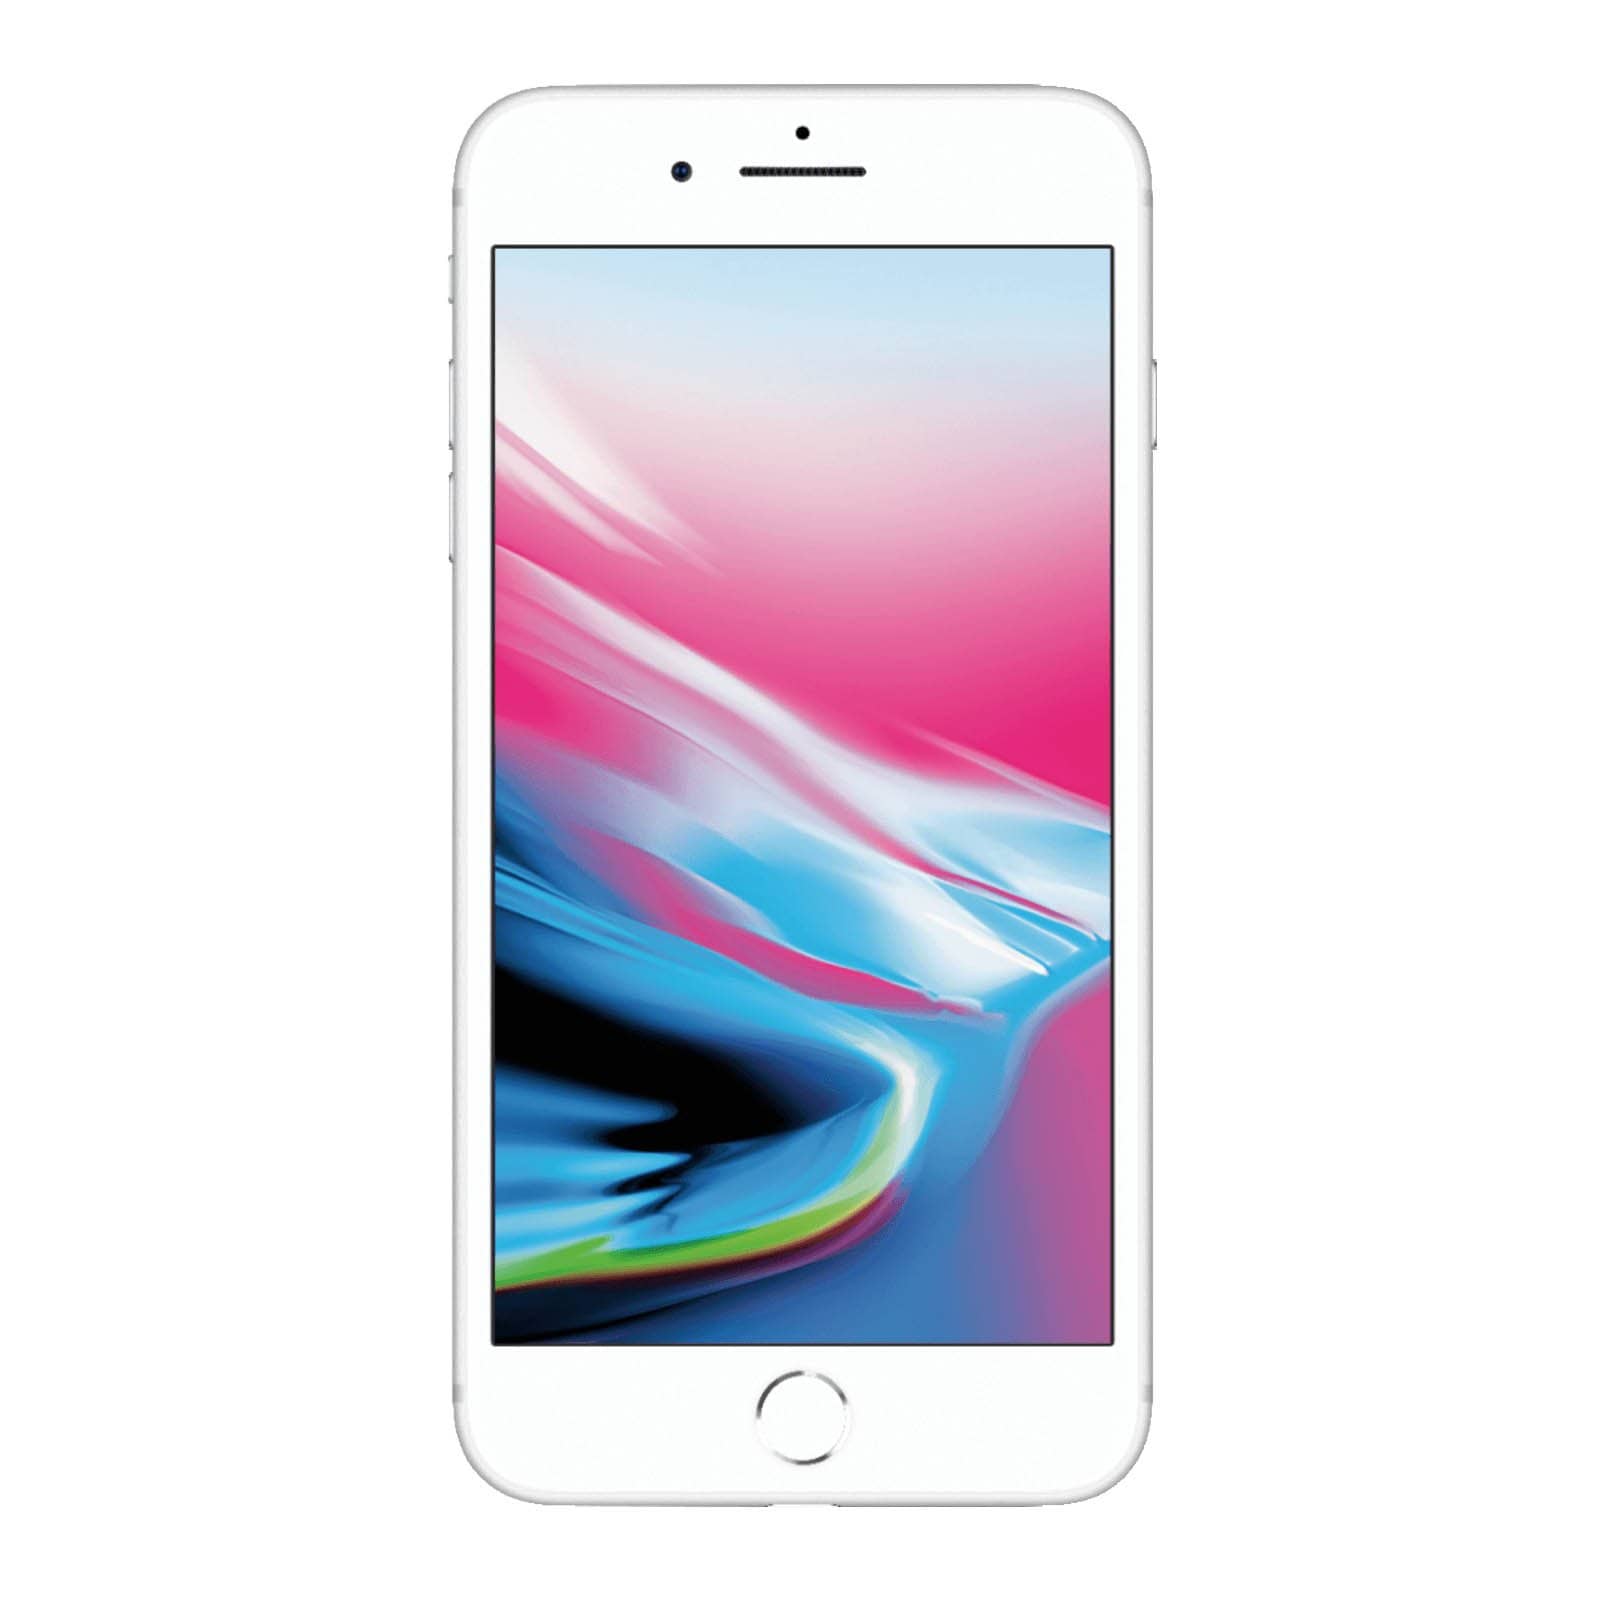 Apple iPhone 8 Plus 256GB Silver Good - Unlocked